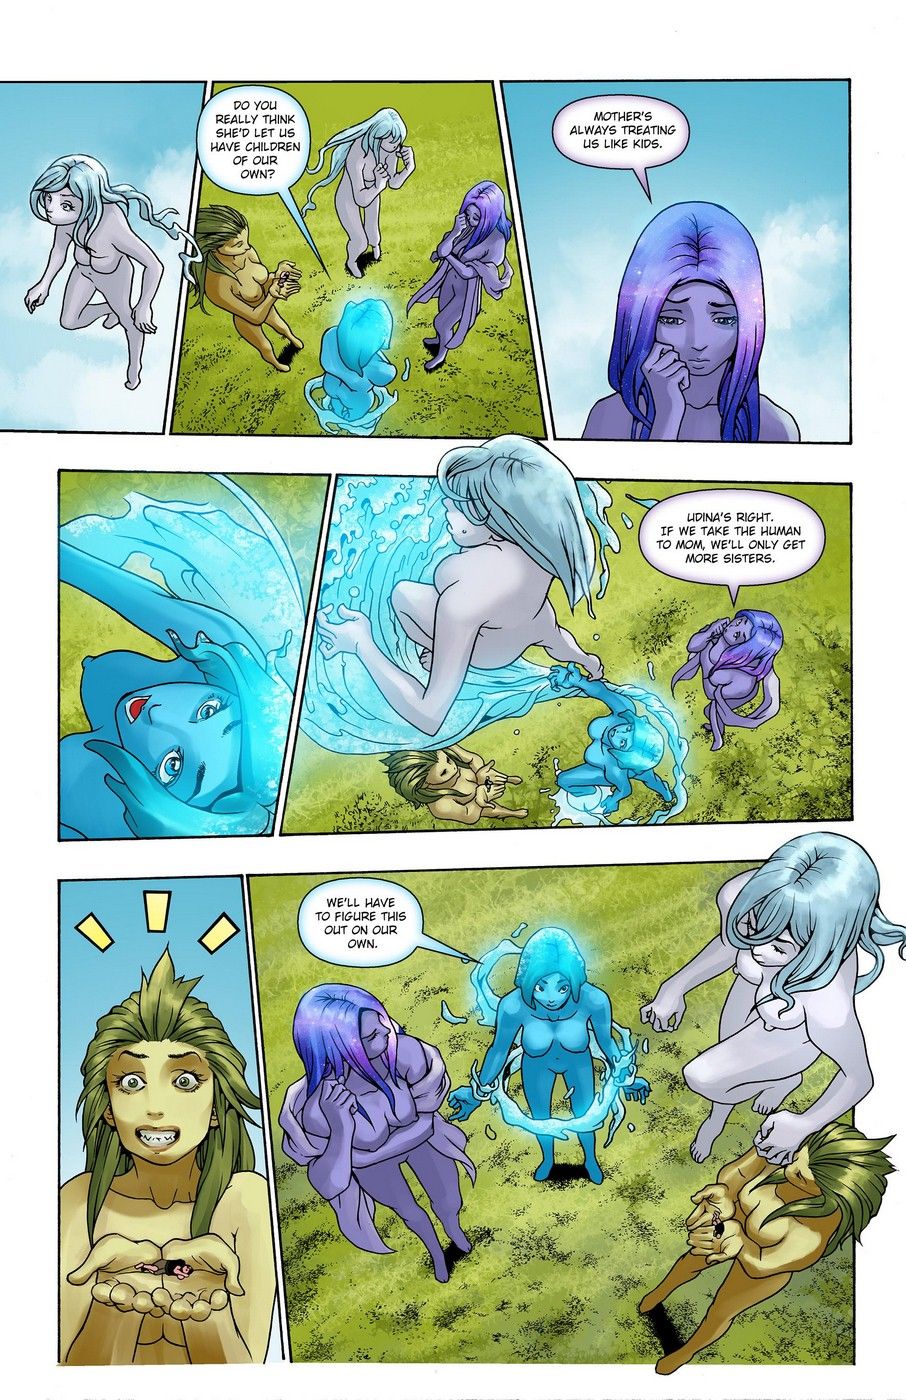 Visiting Eden - Giantness Fan page 8